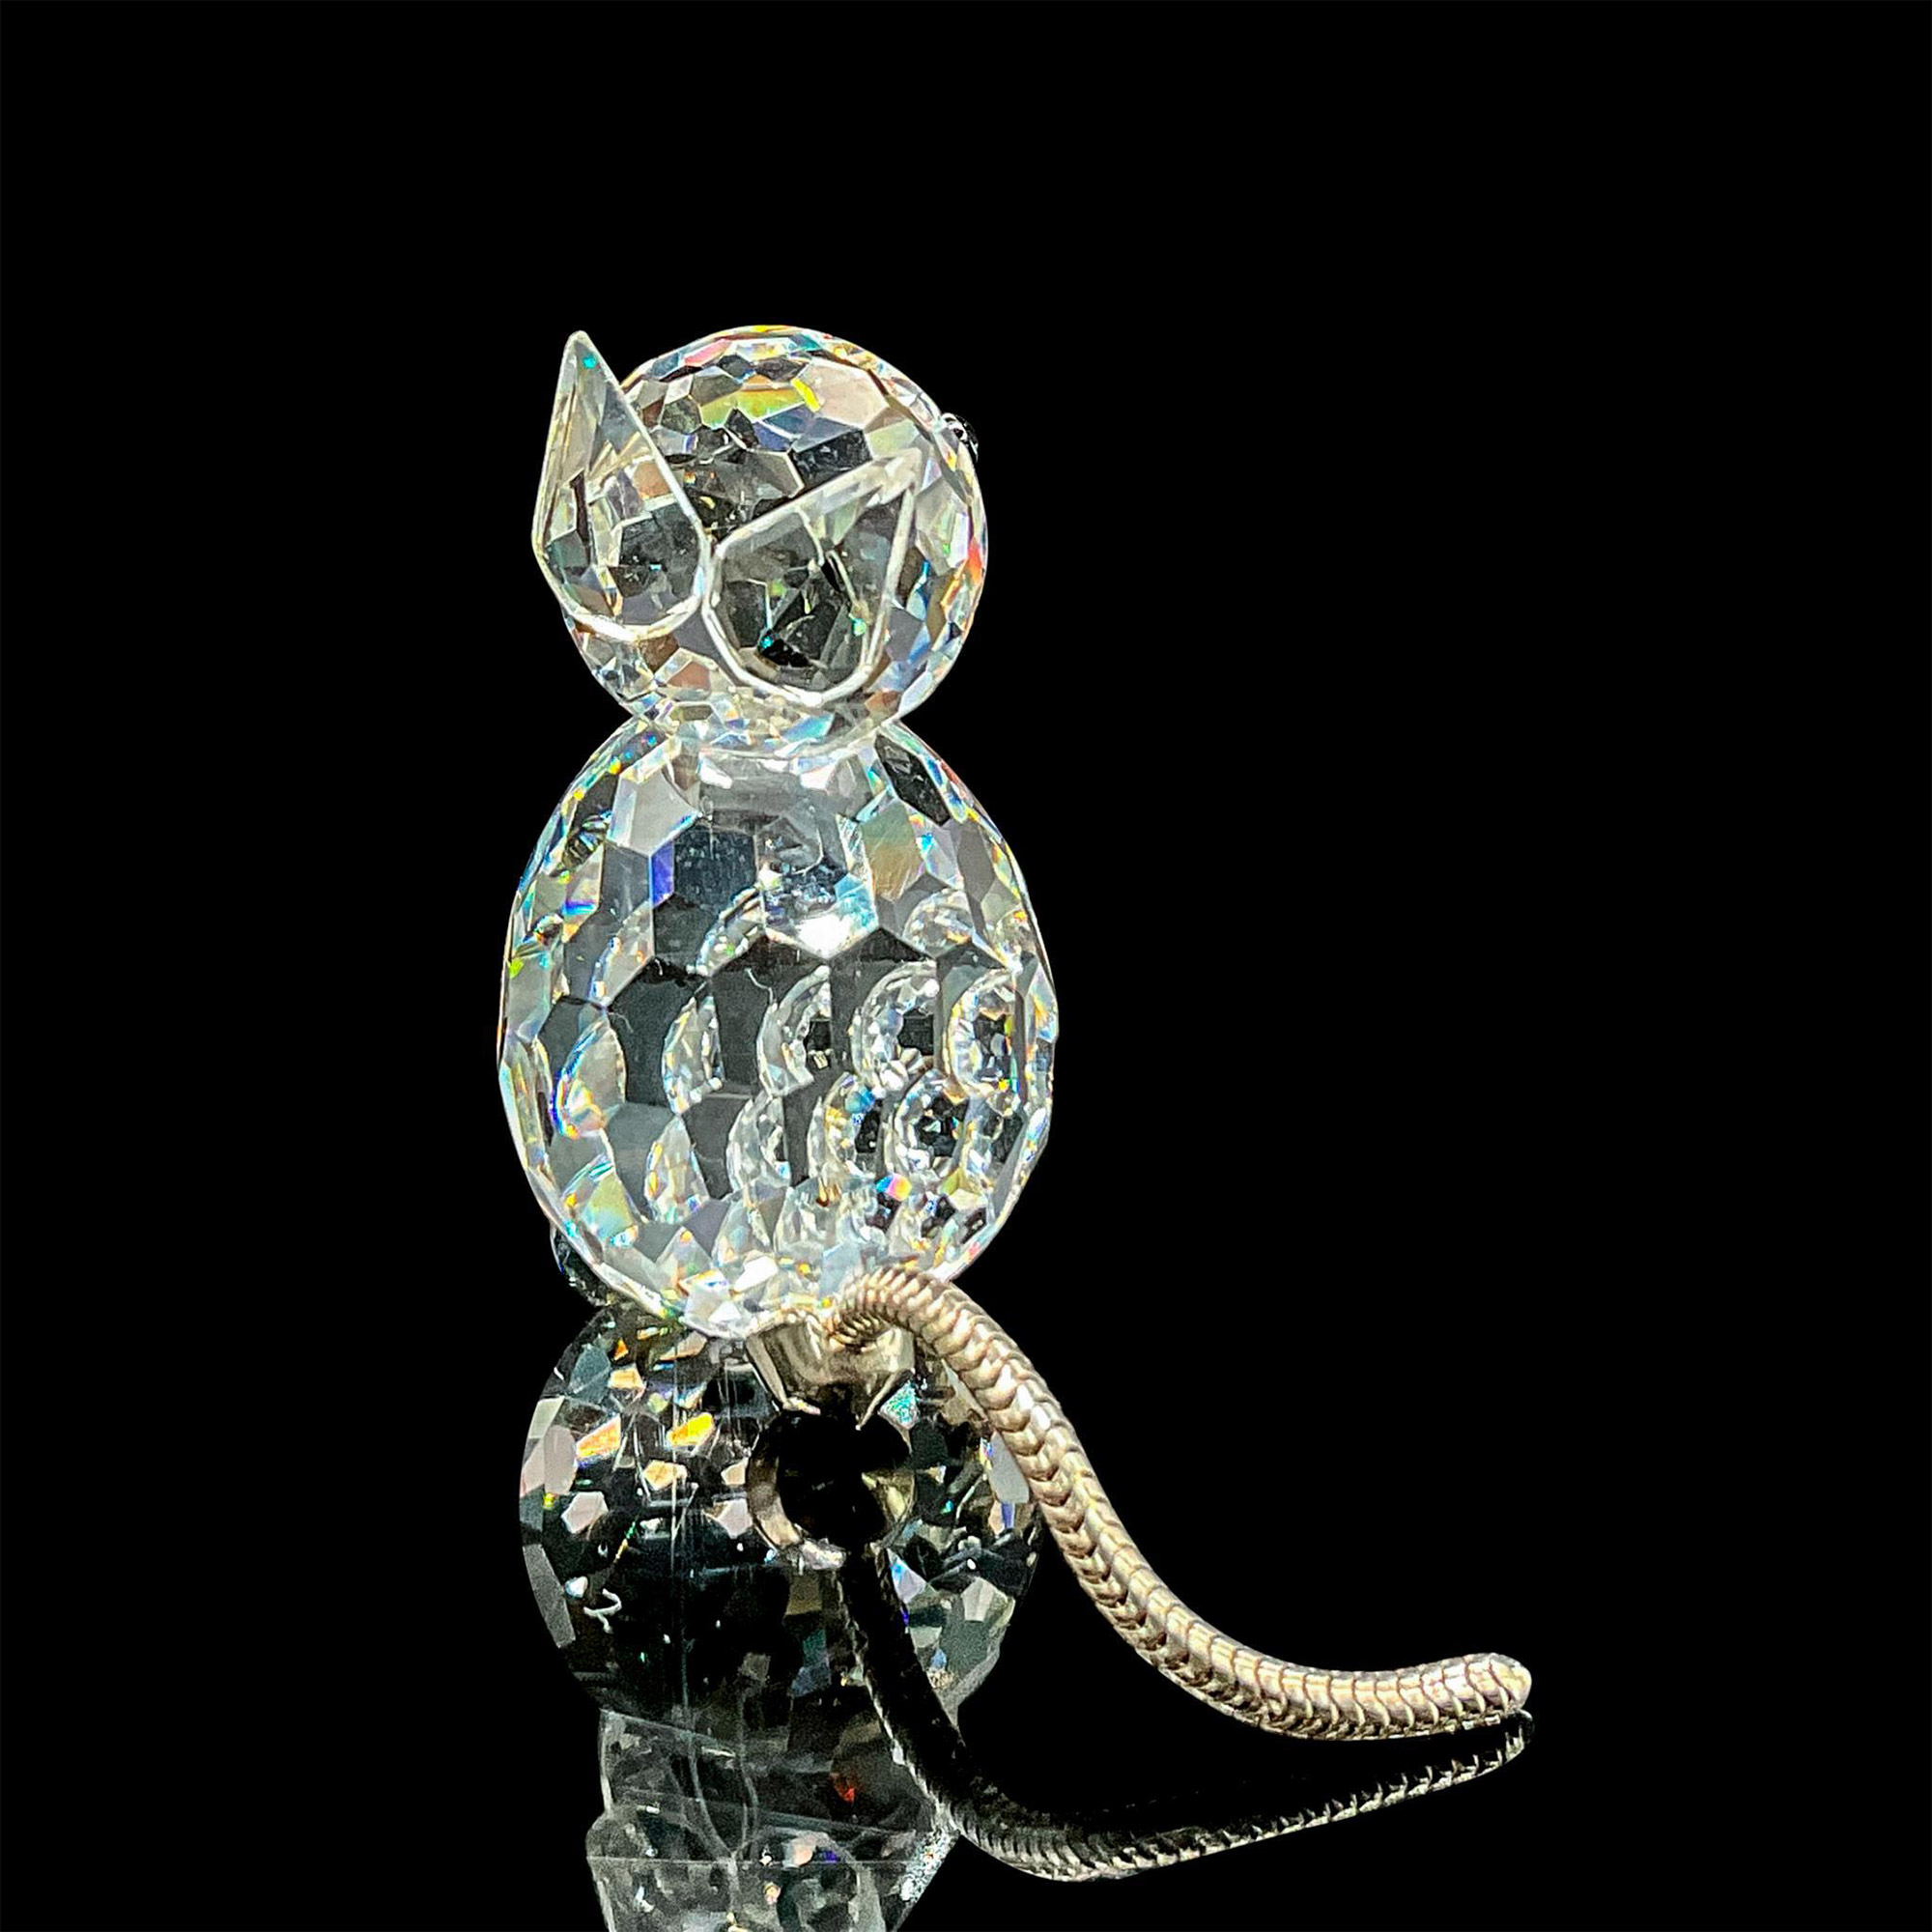 Swarovski Silver Crystal Figurine, Mini Cat - Image 2 of 4